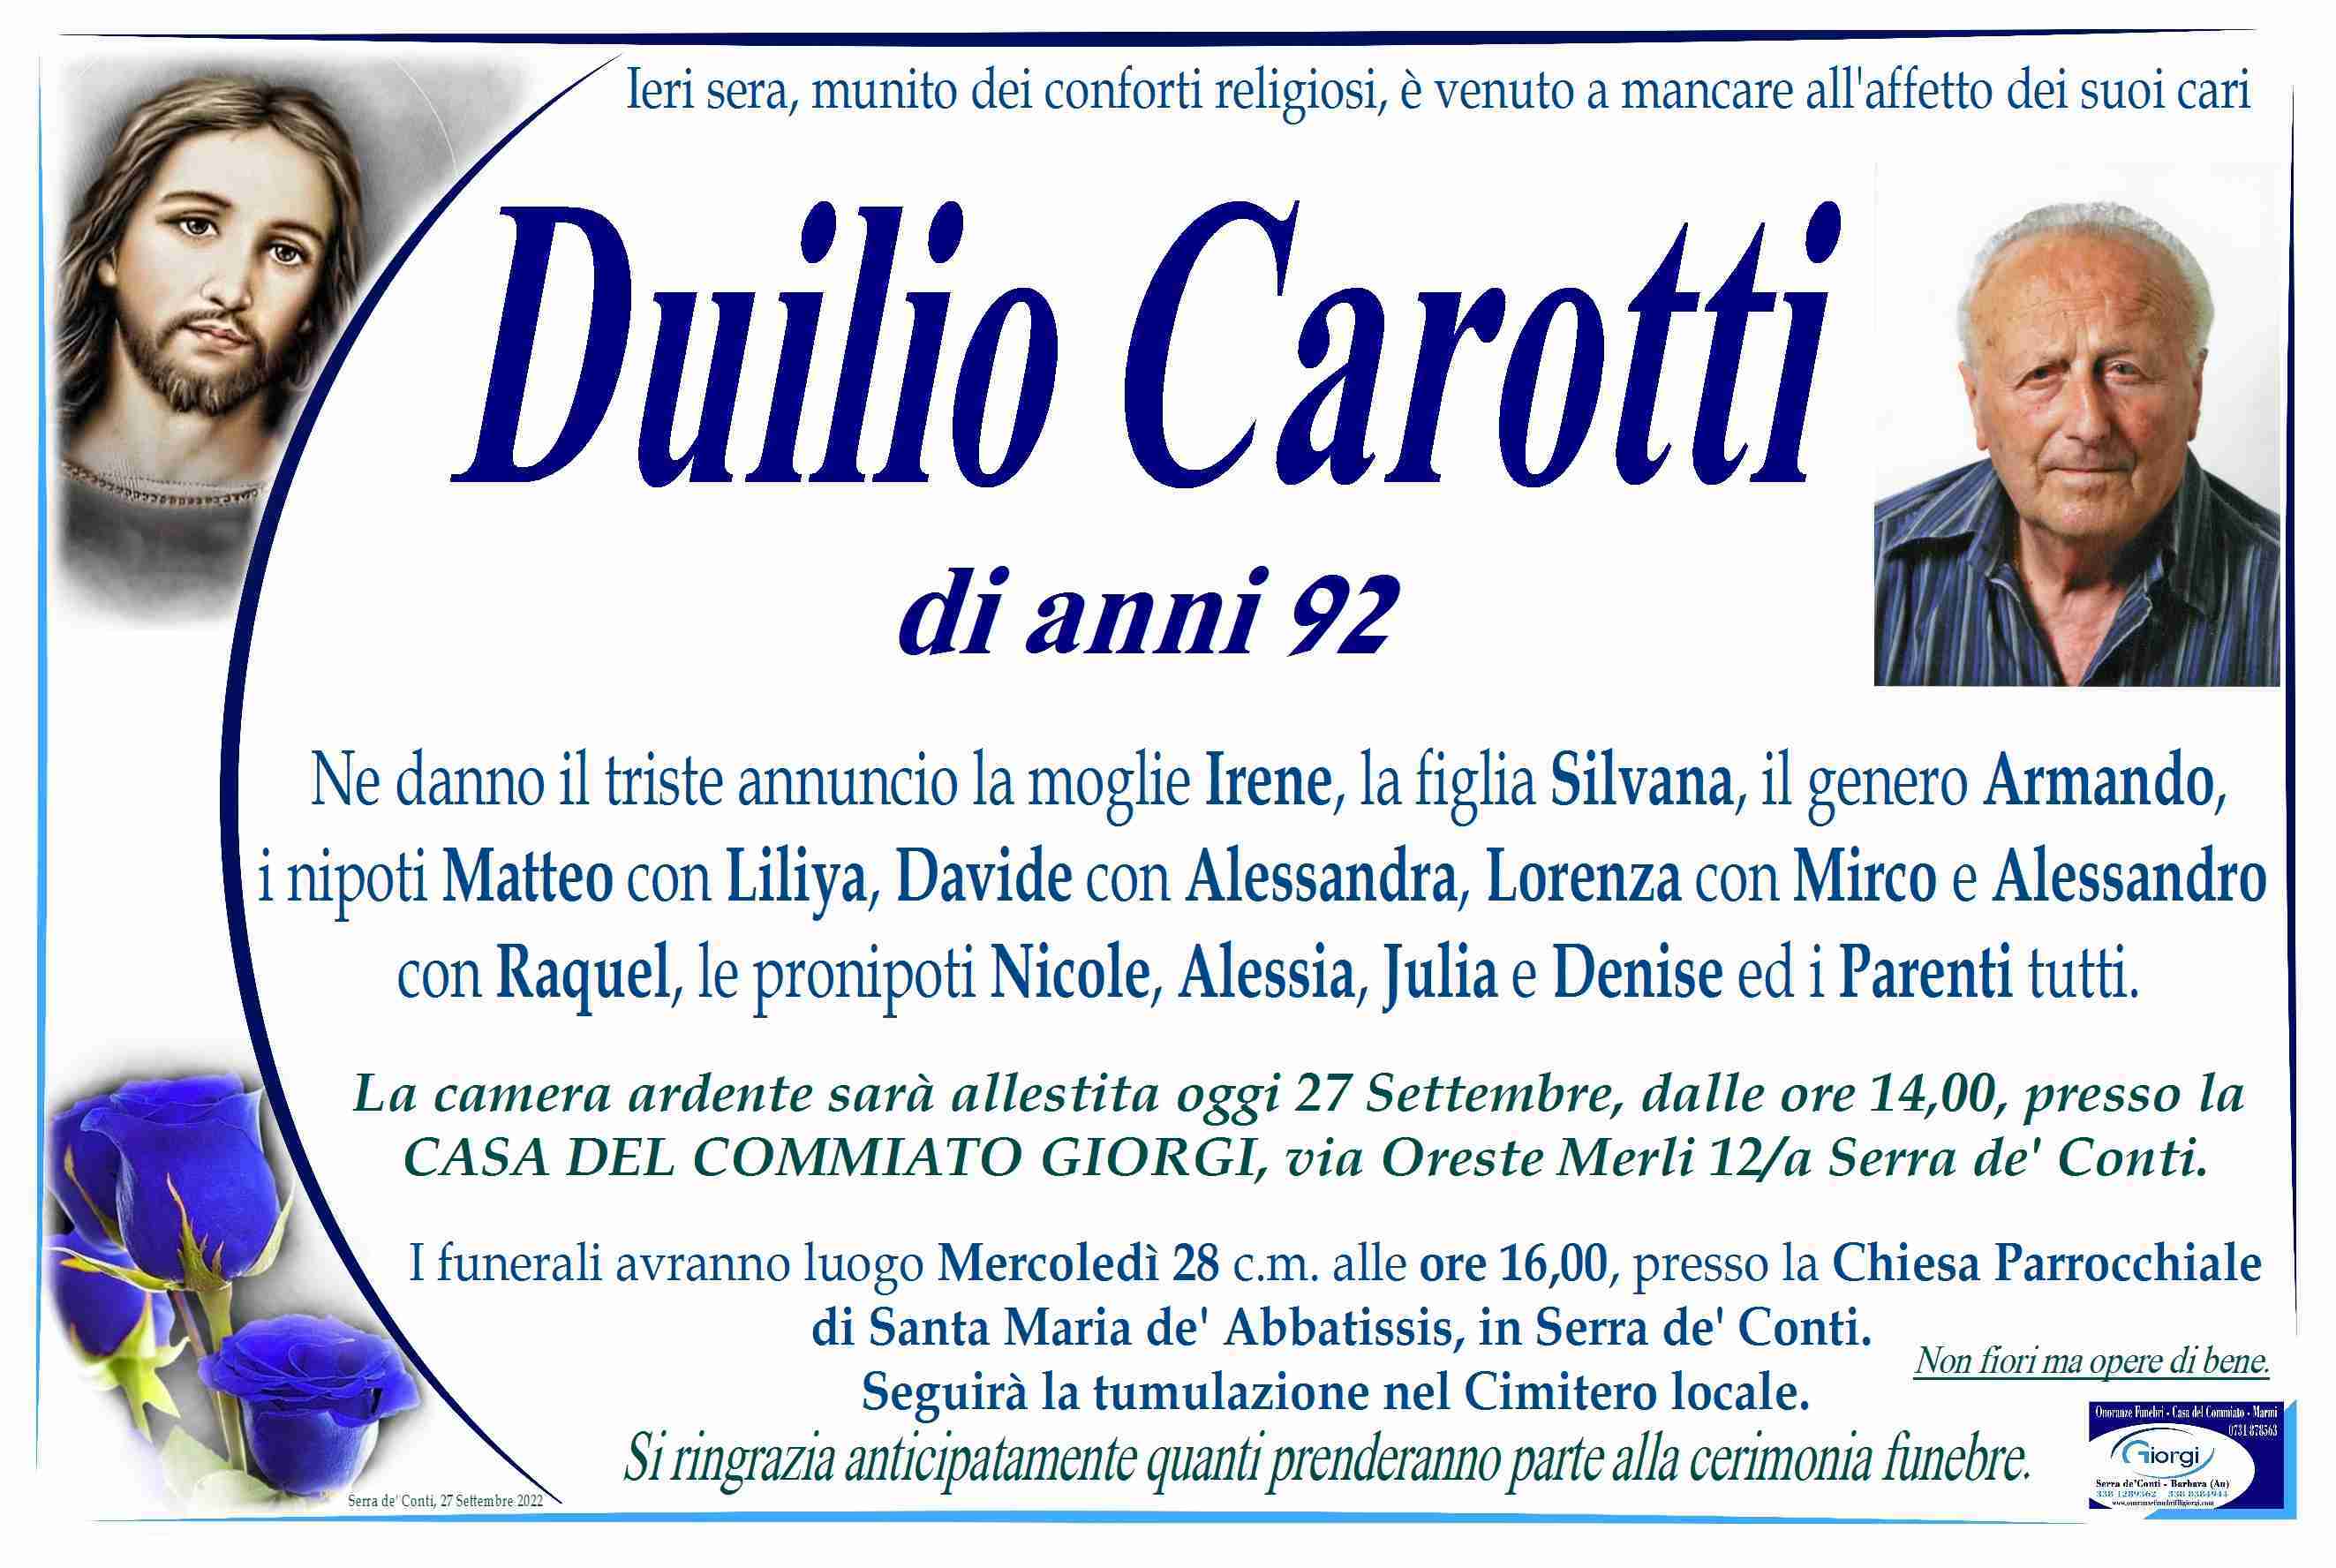 Duilio Carotti